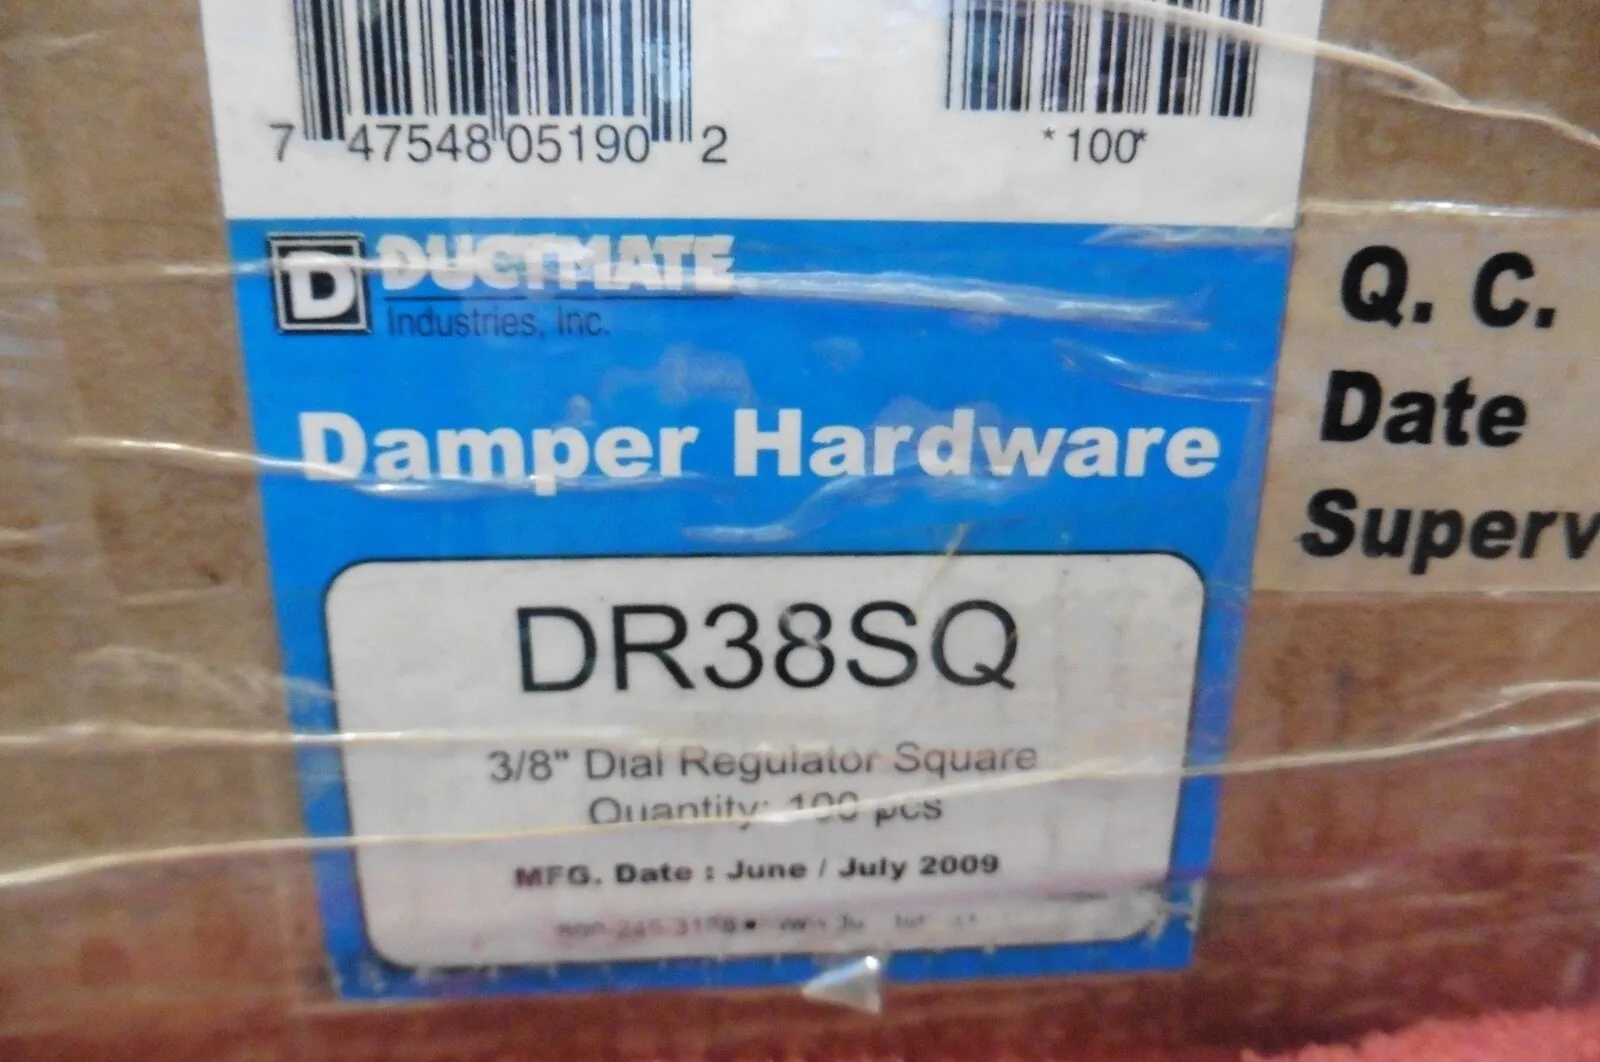 1 Ductmate Dumper Hardware Square Dial Regulator 3/8" DR38SQ